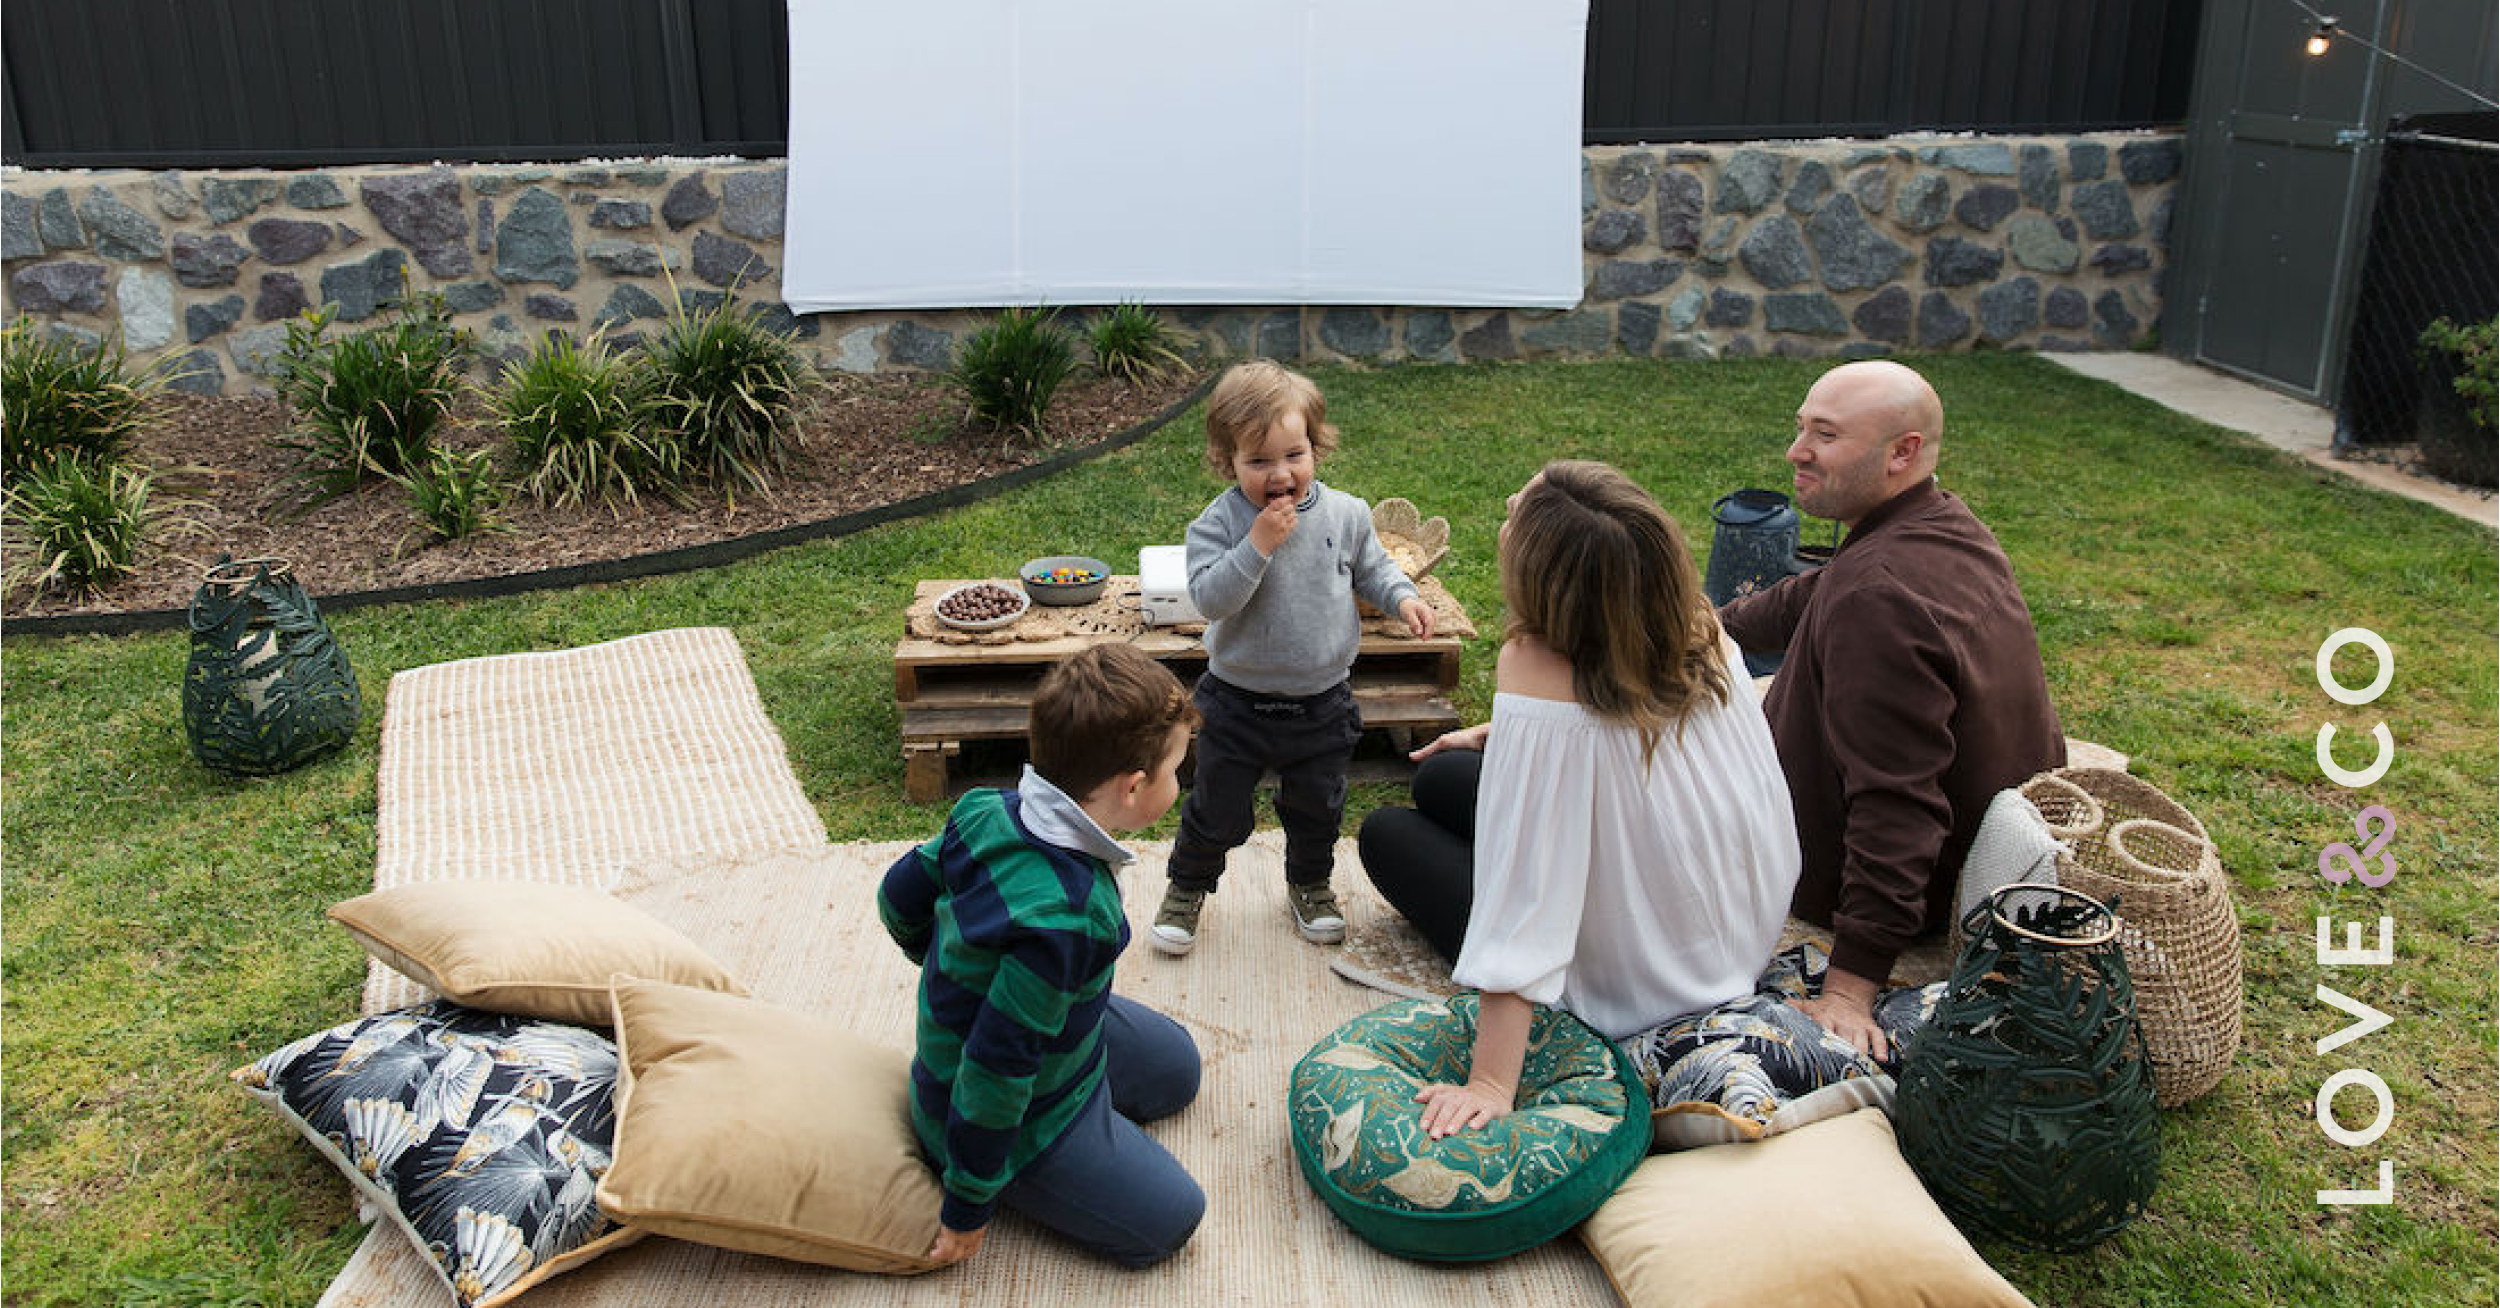 Creating an Outdoor Home Cinema